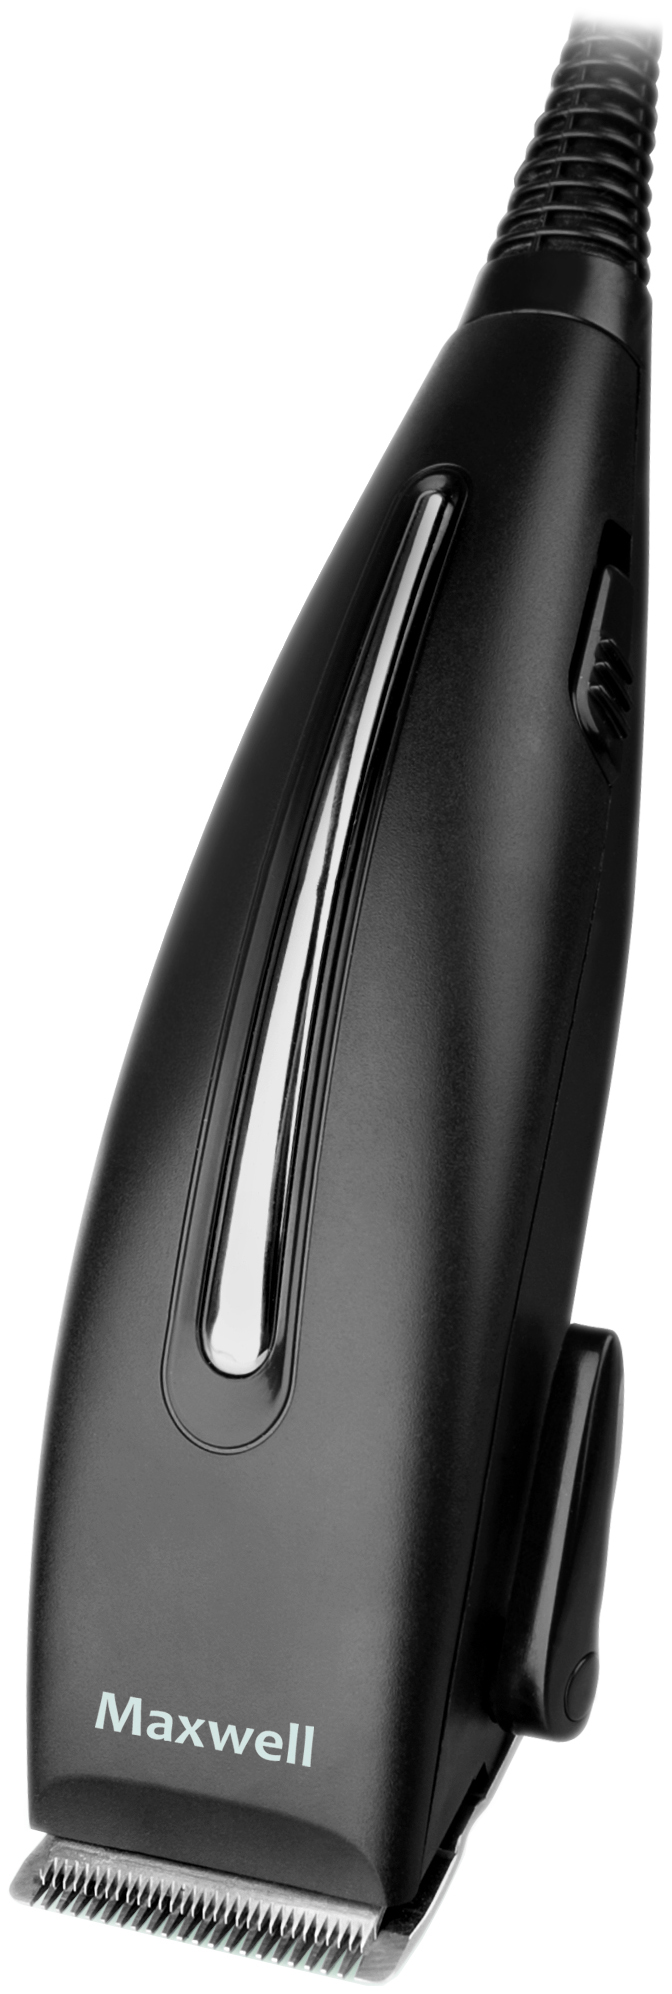 Машинка для стрижки волос Maxwell MW-2112 пирометр инфокрасный condtrol maxwell 2